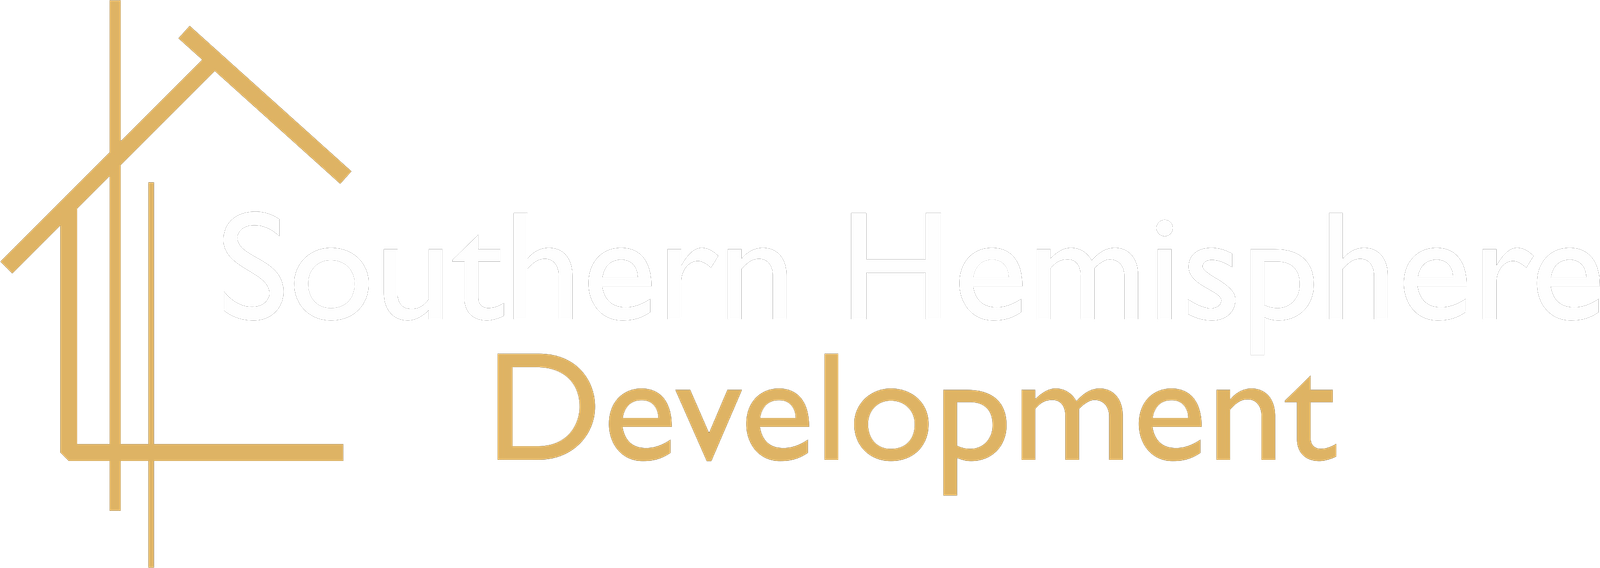 Southern Hemisphere Development